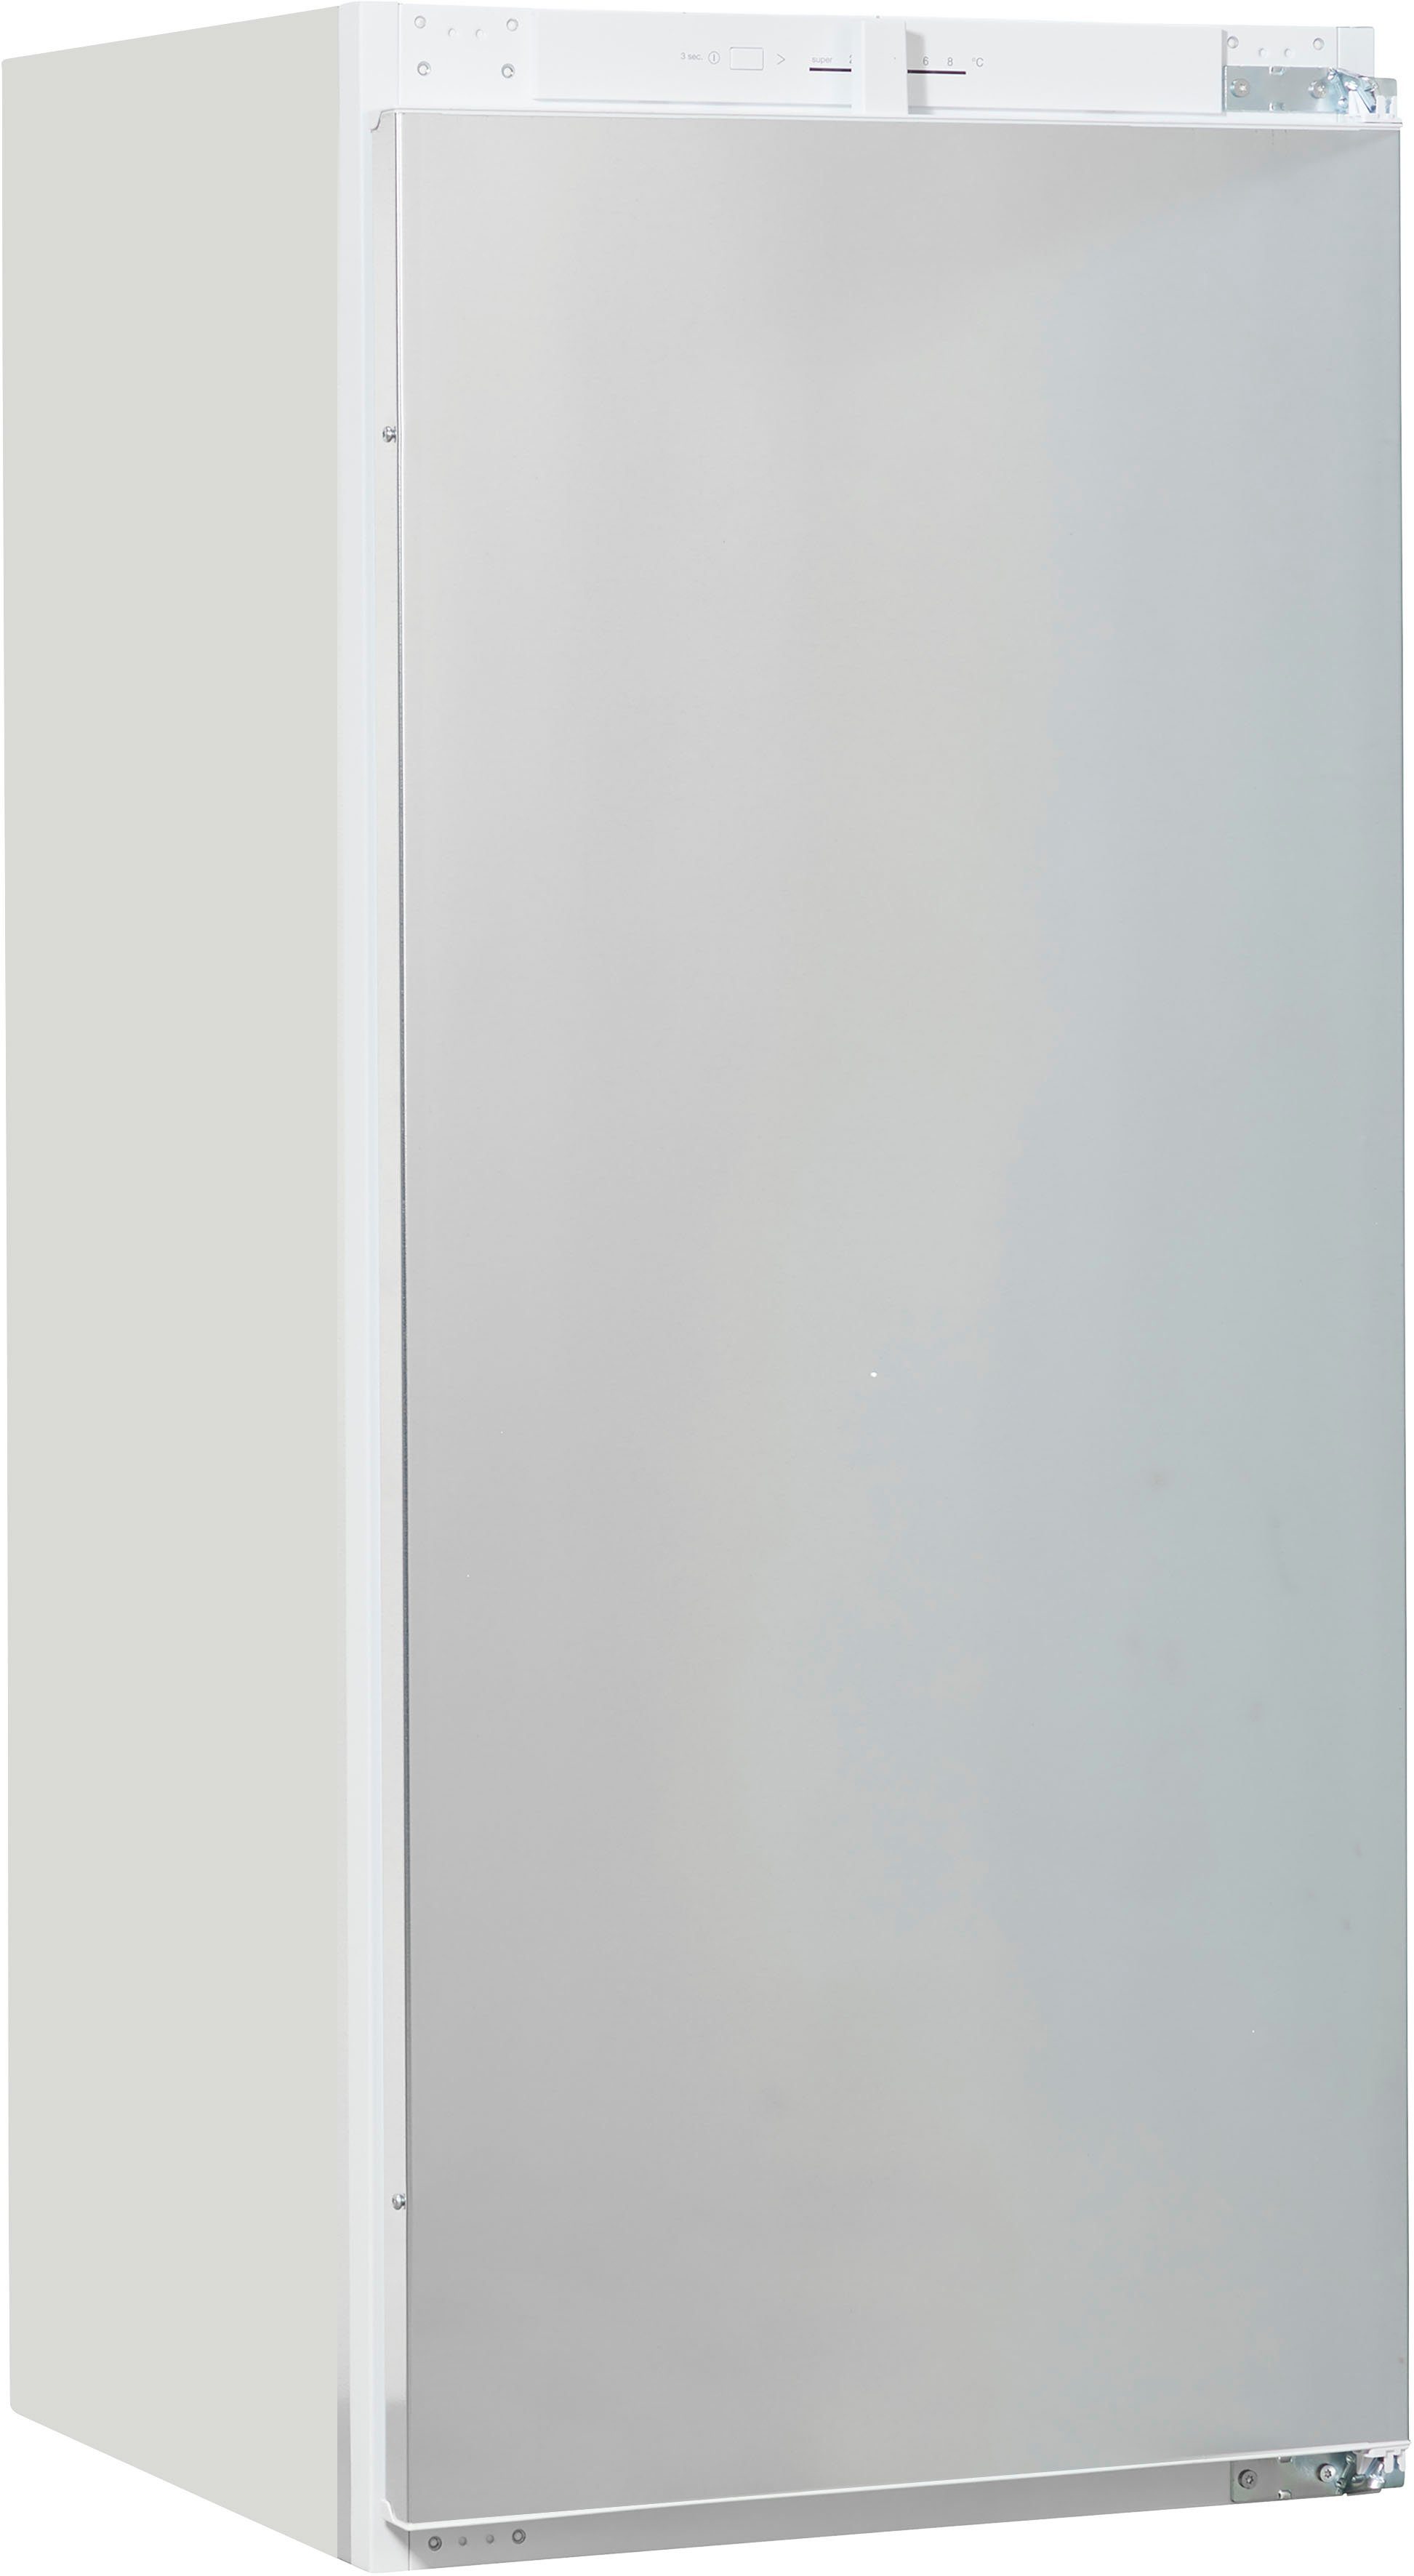 BOSCH Einbaukühlschrank Serie 2 KIL42NSE0, 122,1 cm hoch, 54,1 cm breit,  Betriebsgeräusch: 35 dB